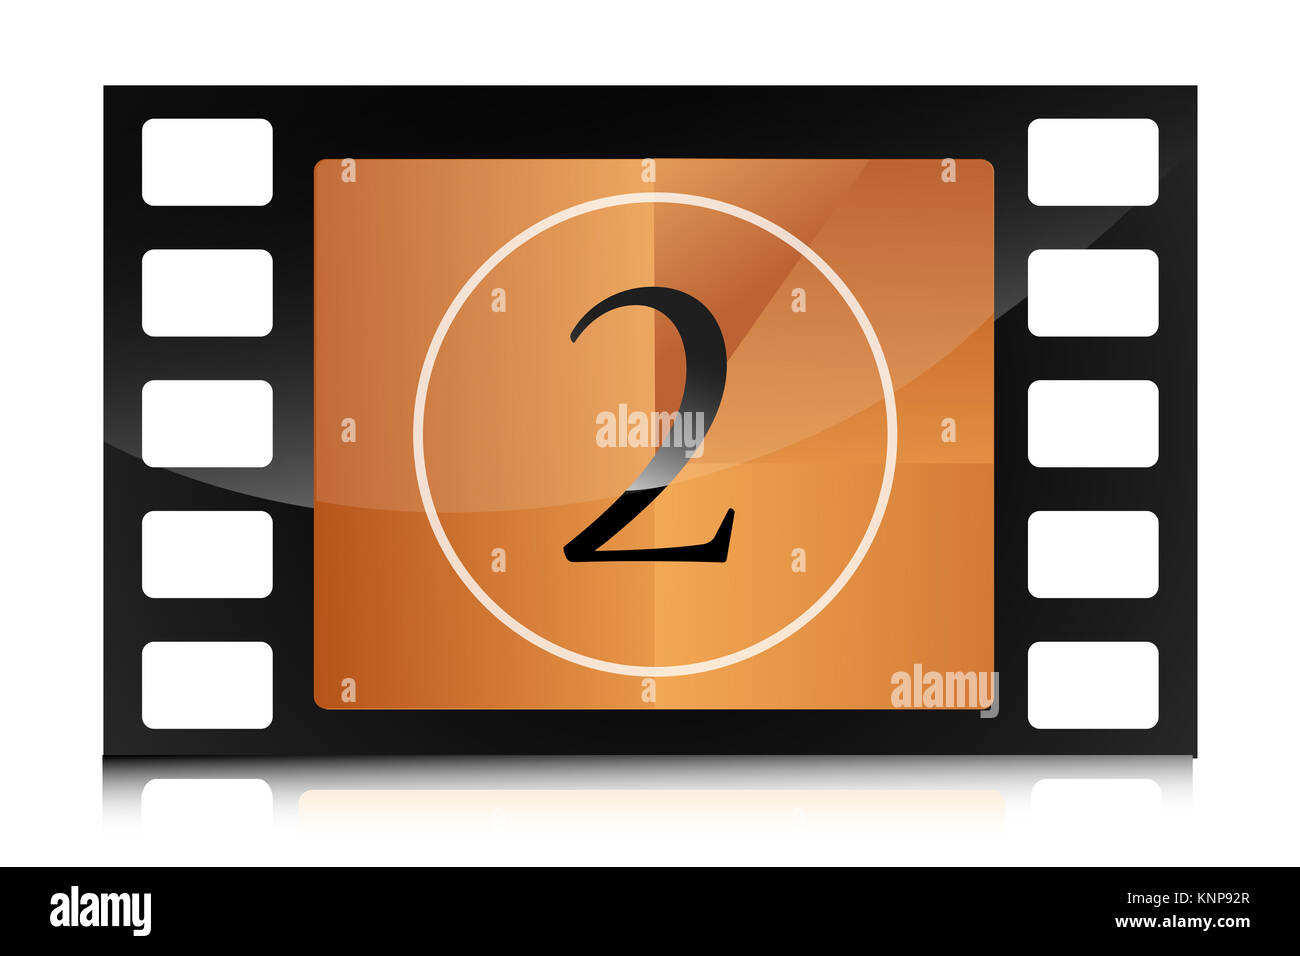 illustration of countdown on film strip Stock Photo